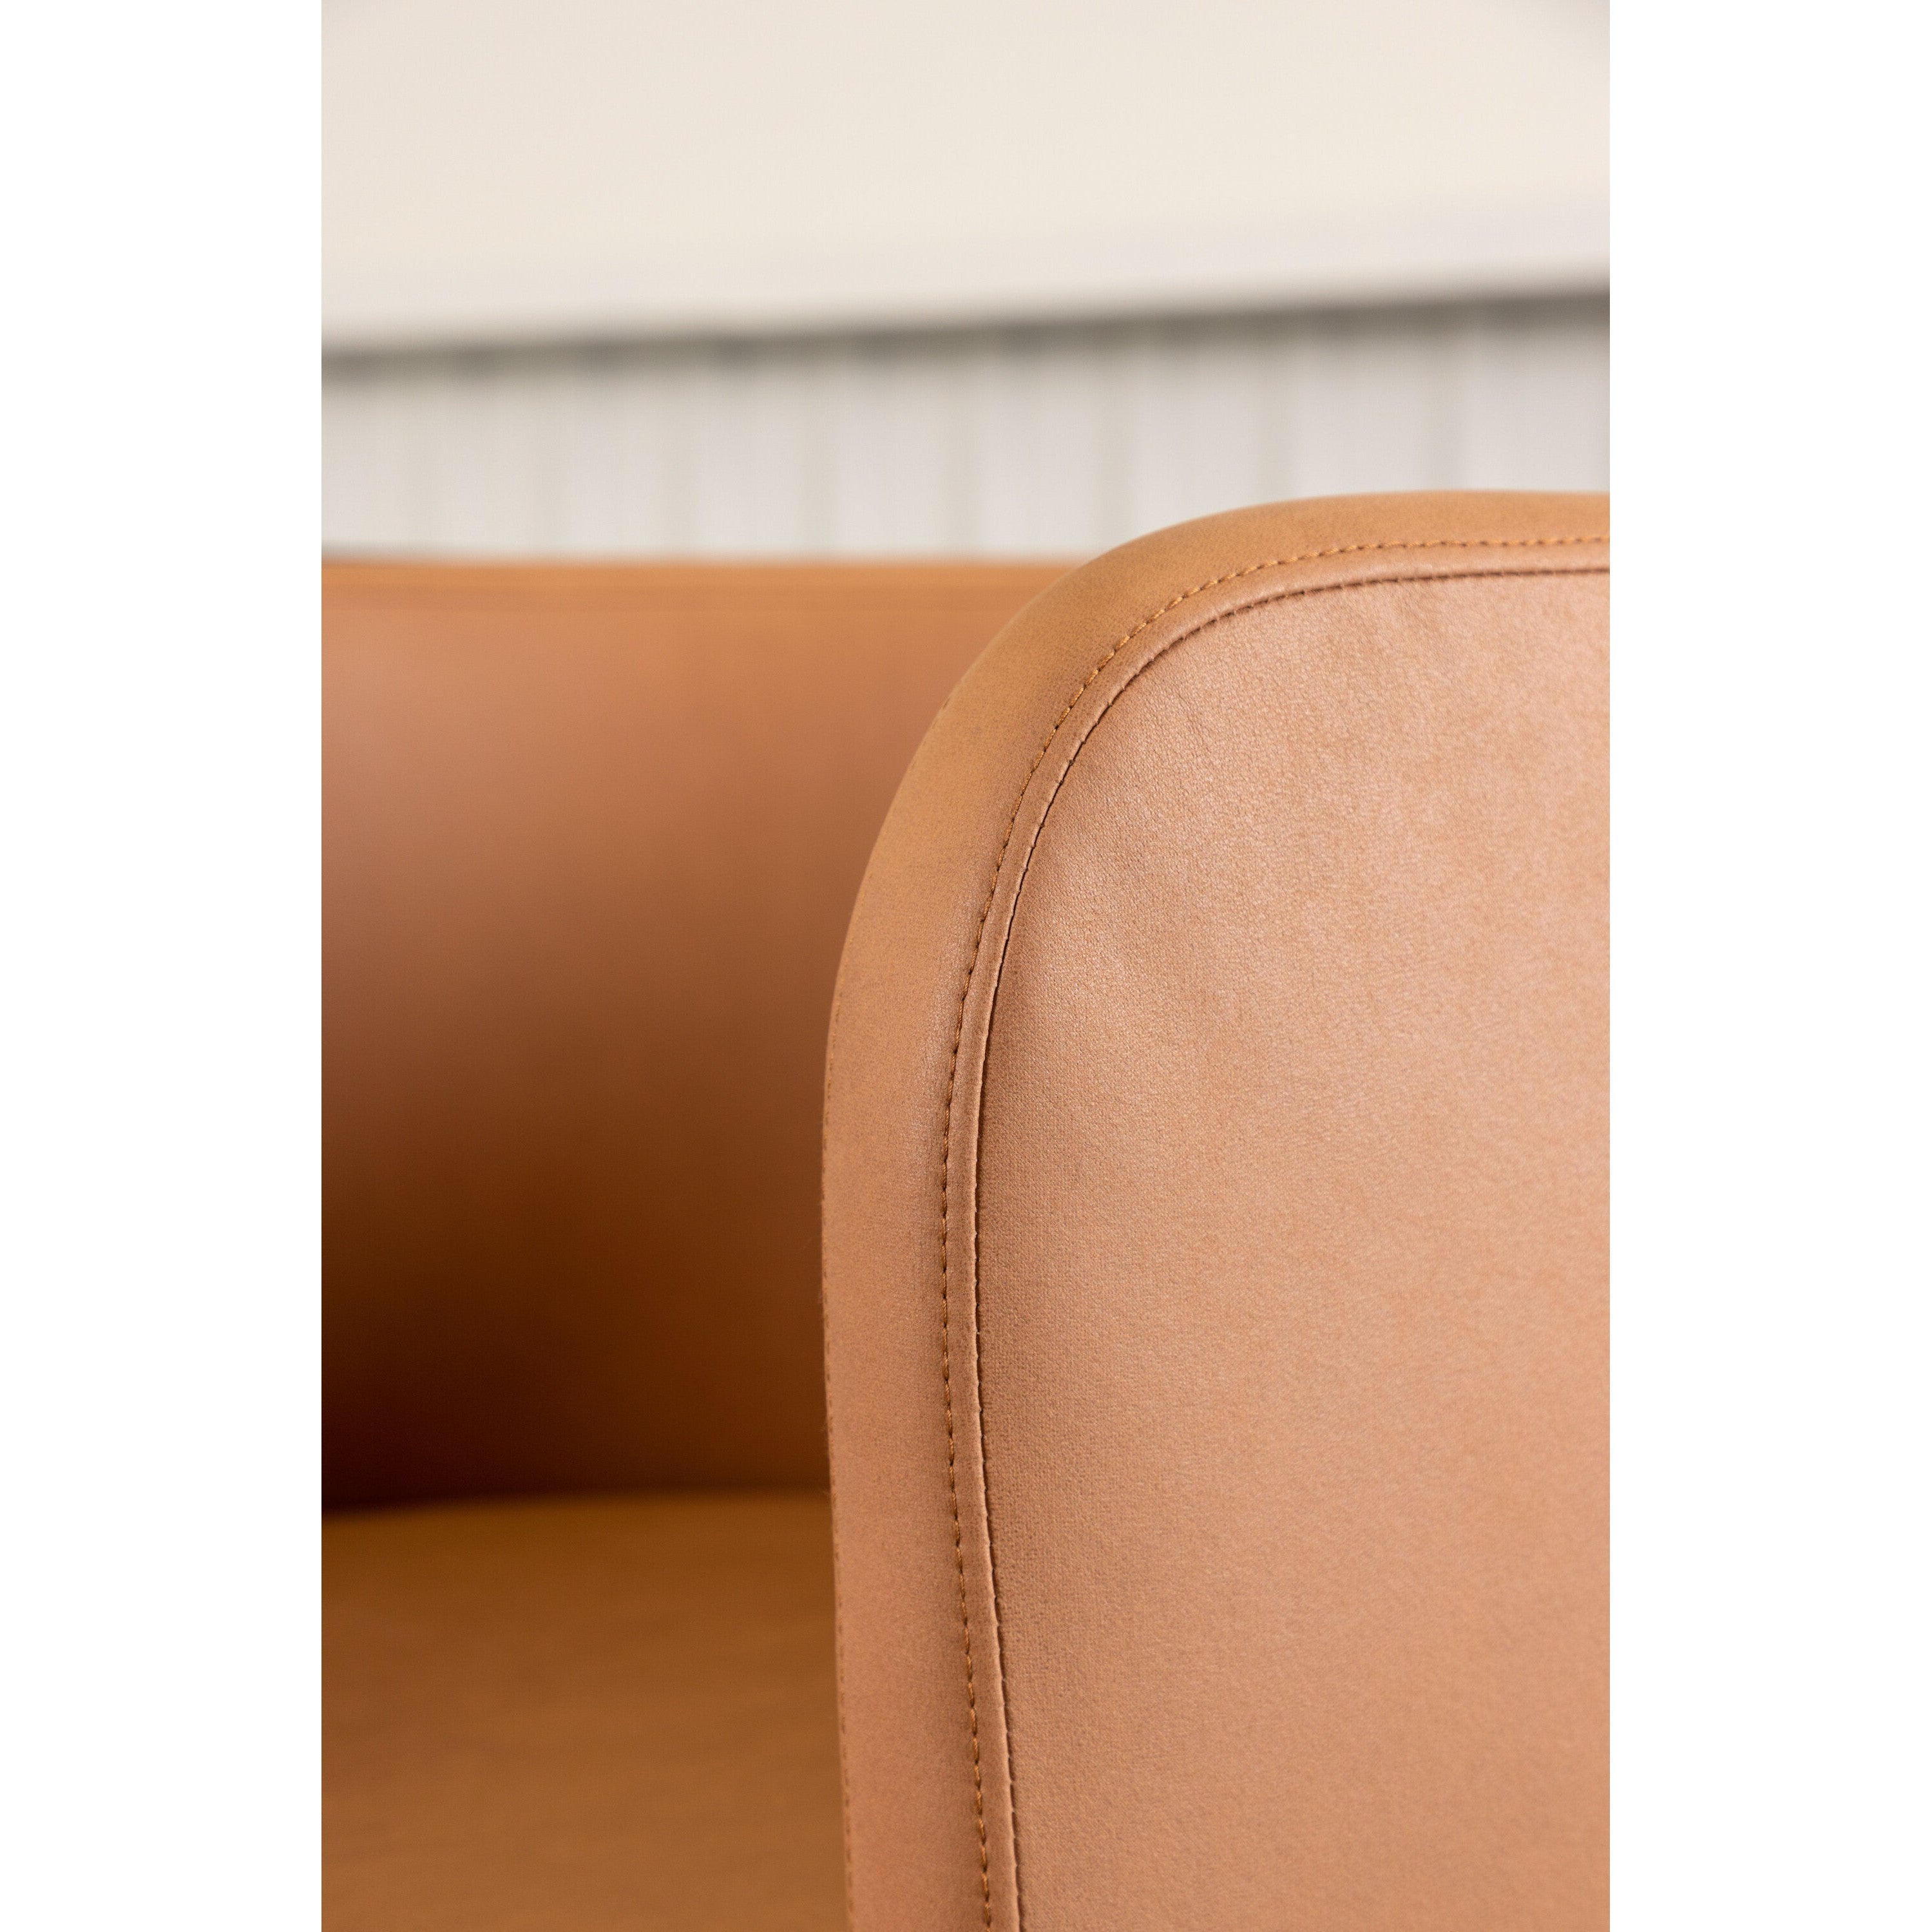 Simrishamn Stol-Chair-Furniture Fashion-peaceofhome.se